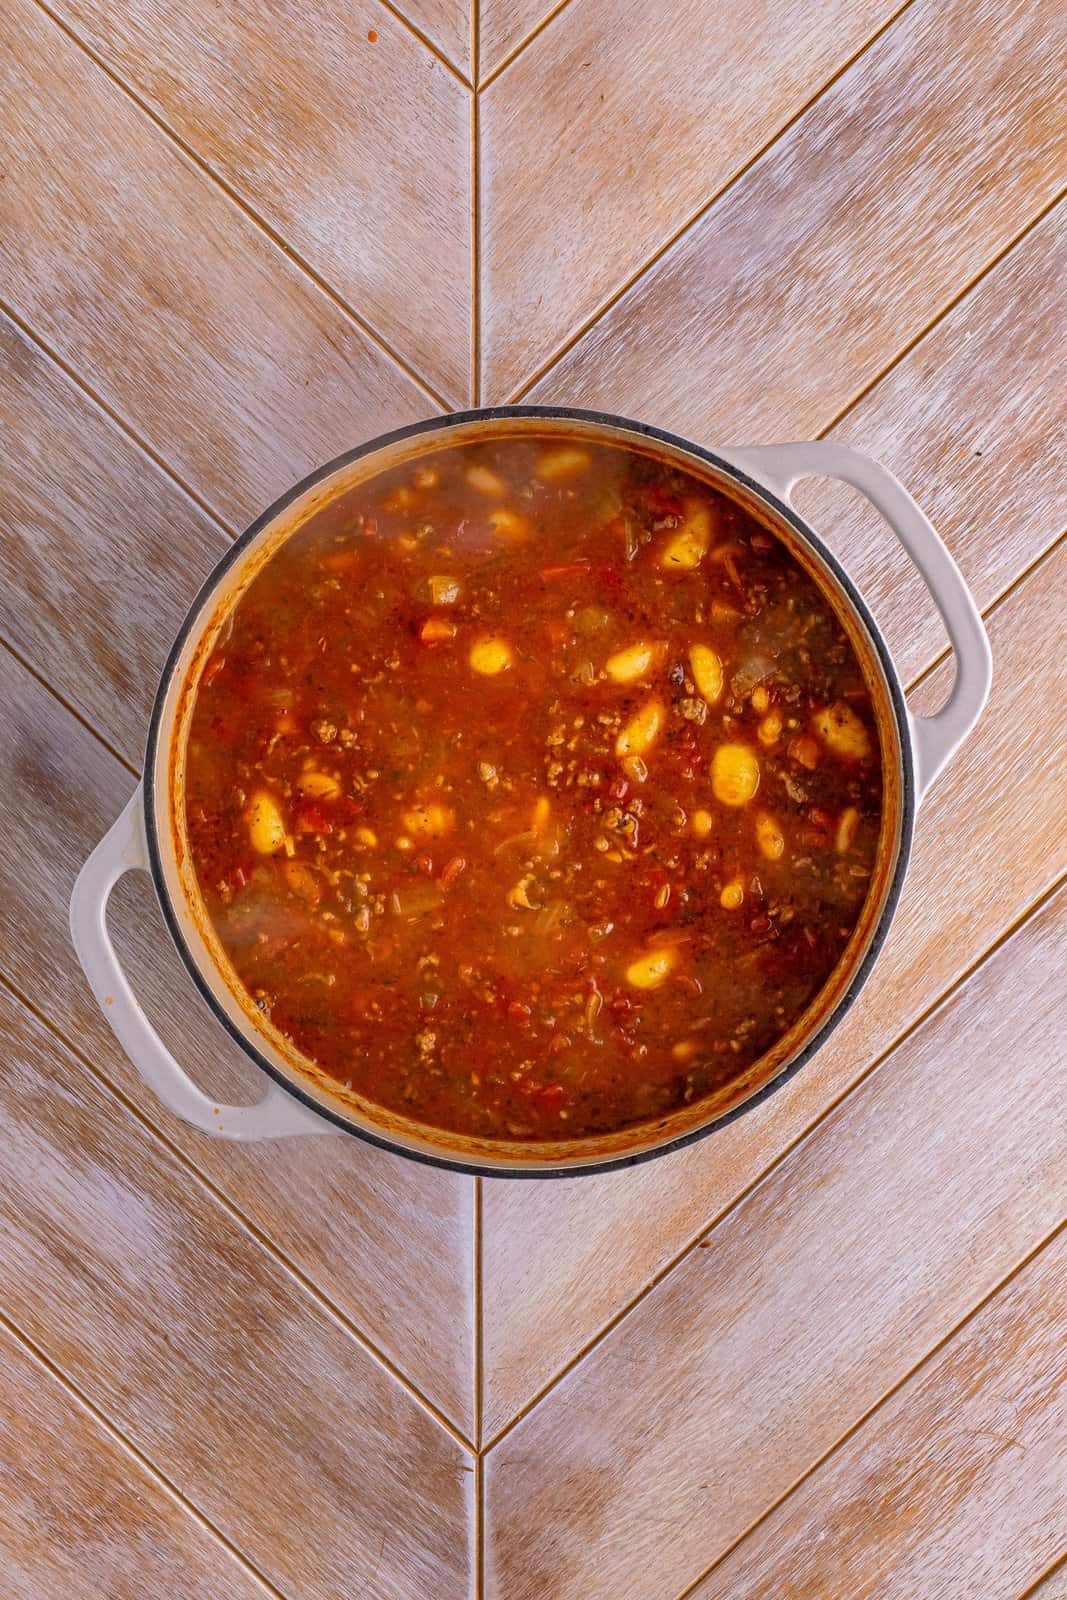 A pot with Italian gnocchi soup.